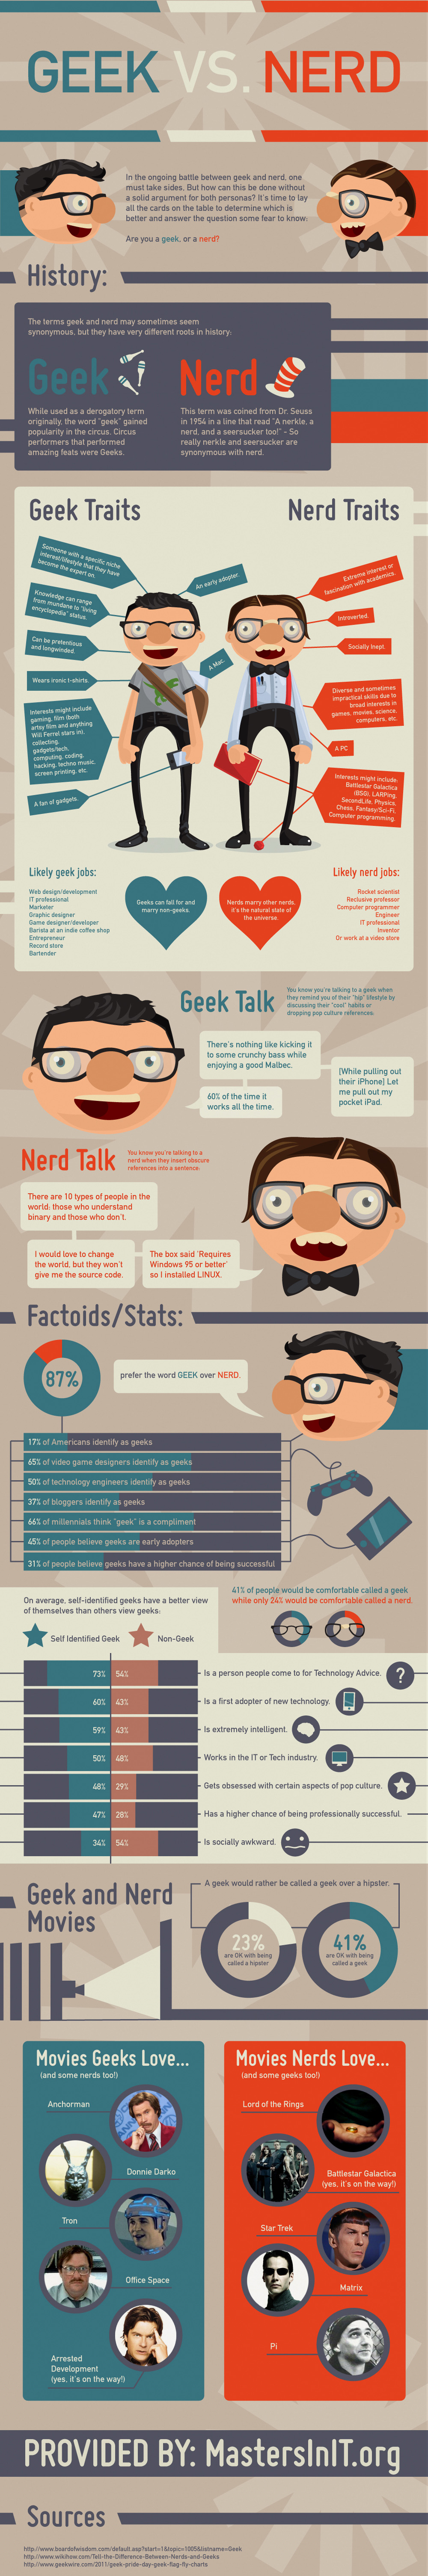 difference between nerd geek dweeb